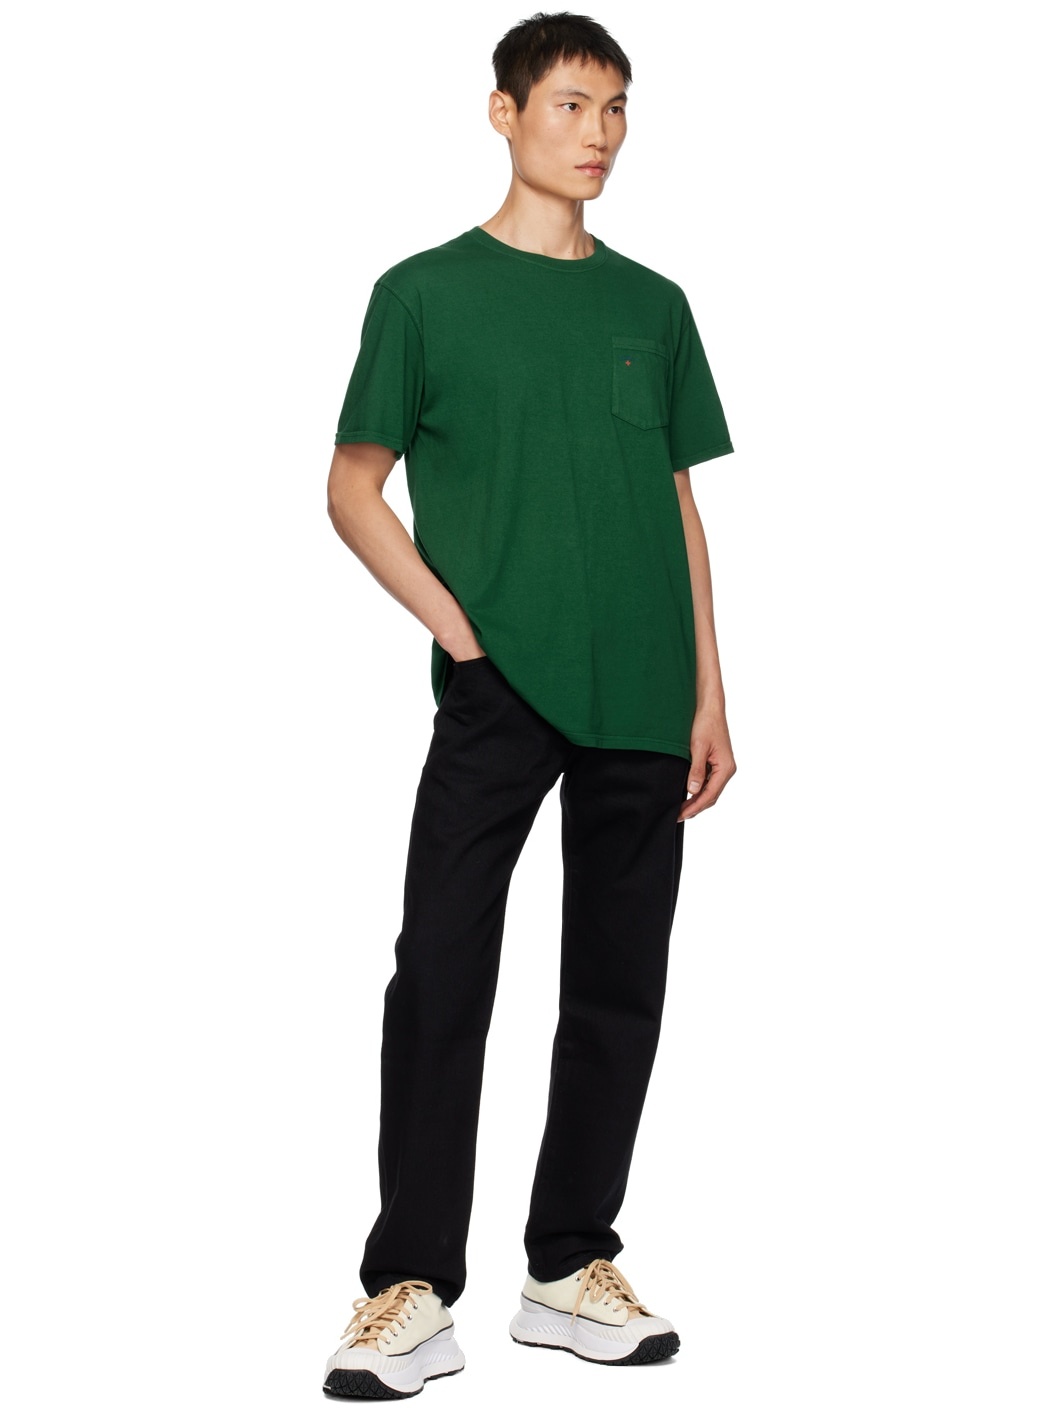 Green Pocket T-Shirt - 4